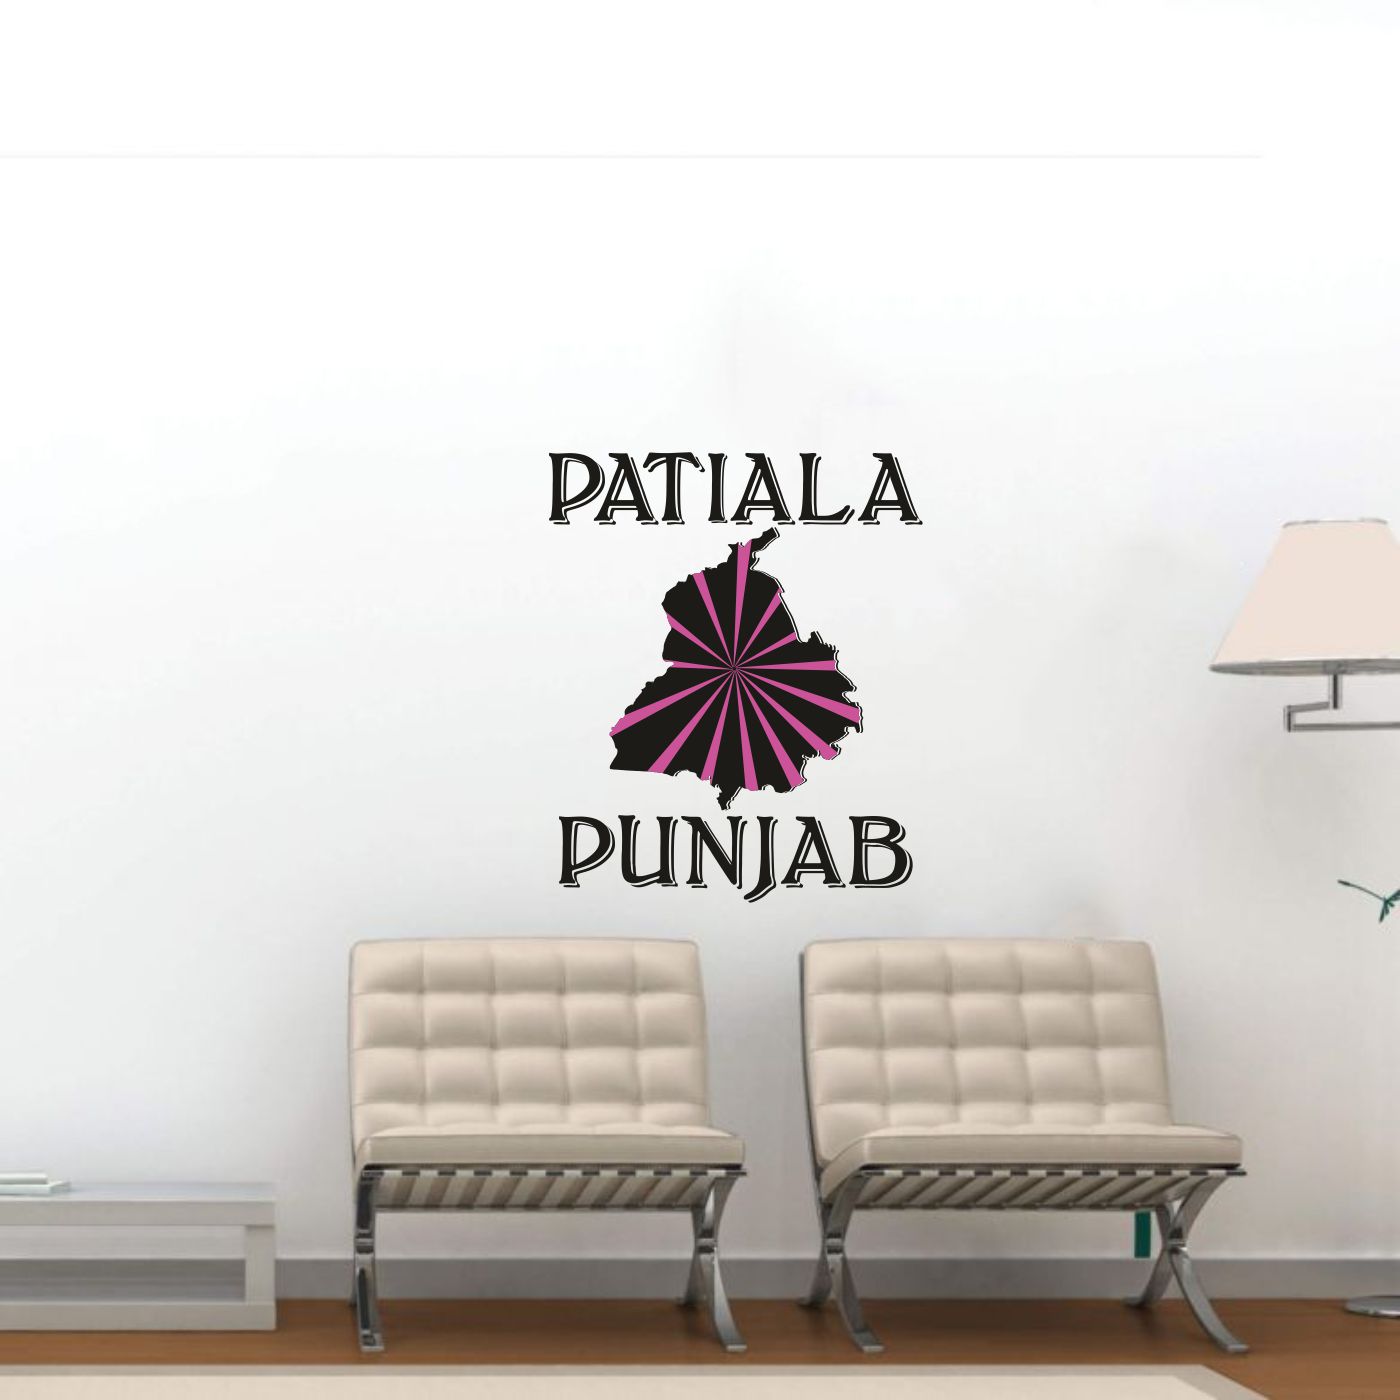 ORKA Punjabi Theme Wall Sticker 11  